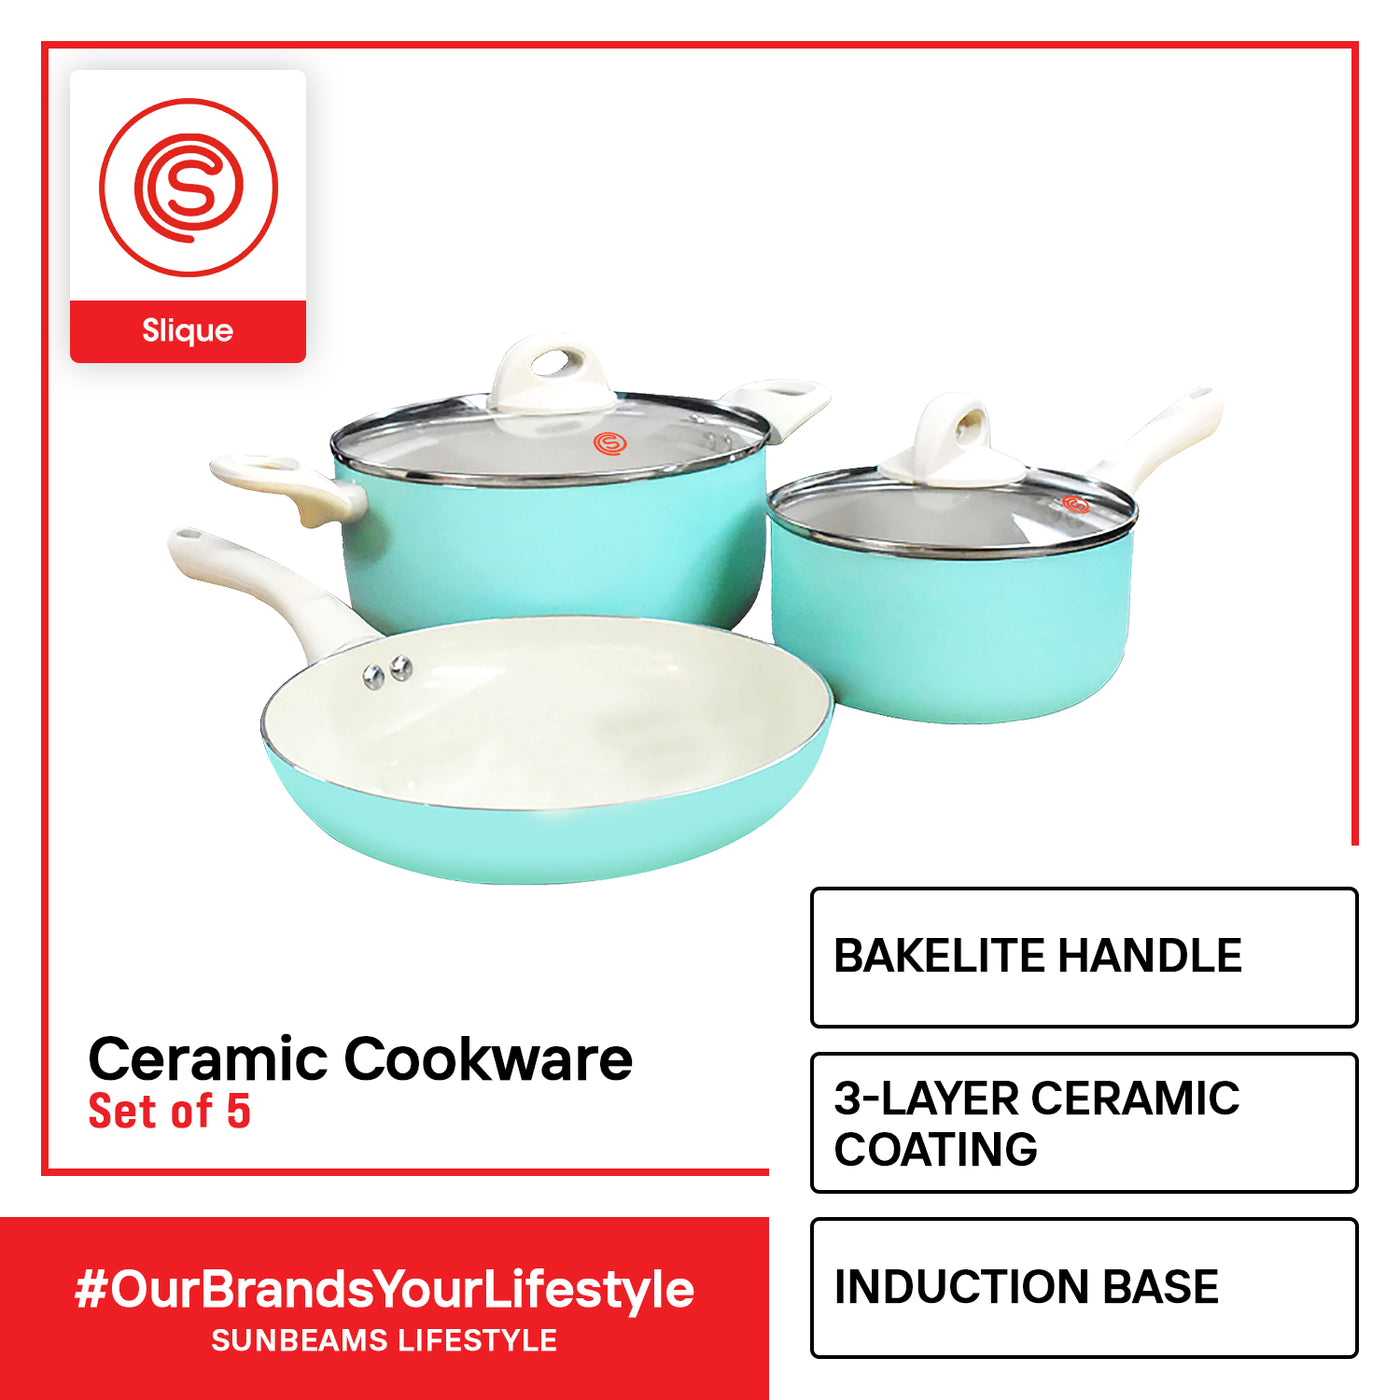 SLIQUE Ceramic Cookware Premium Multi Layer Ceramic Coating Induction Base Set of 5 Amazing Gift Idea For Any Occasion!